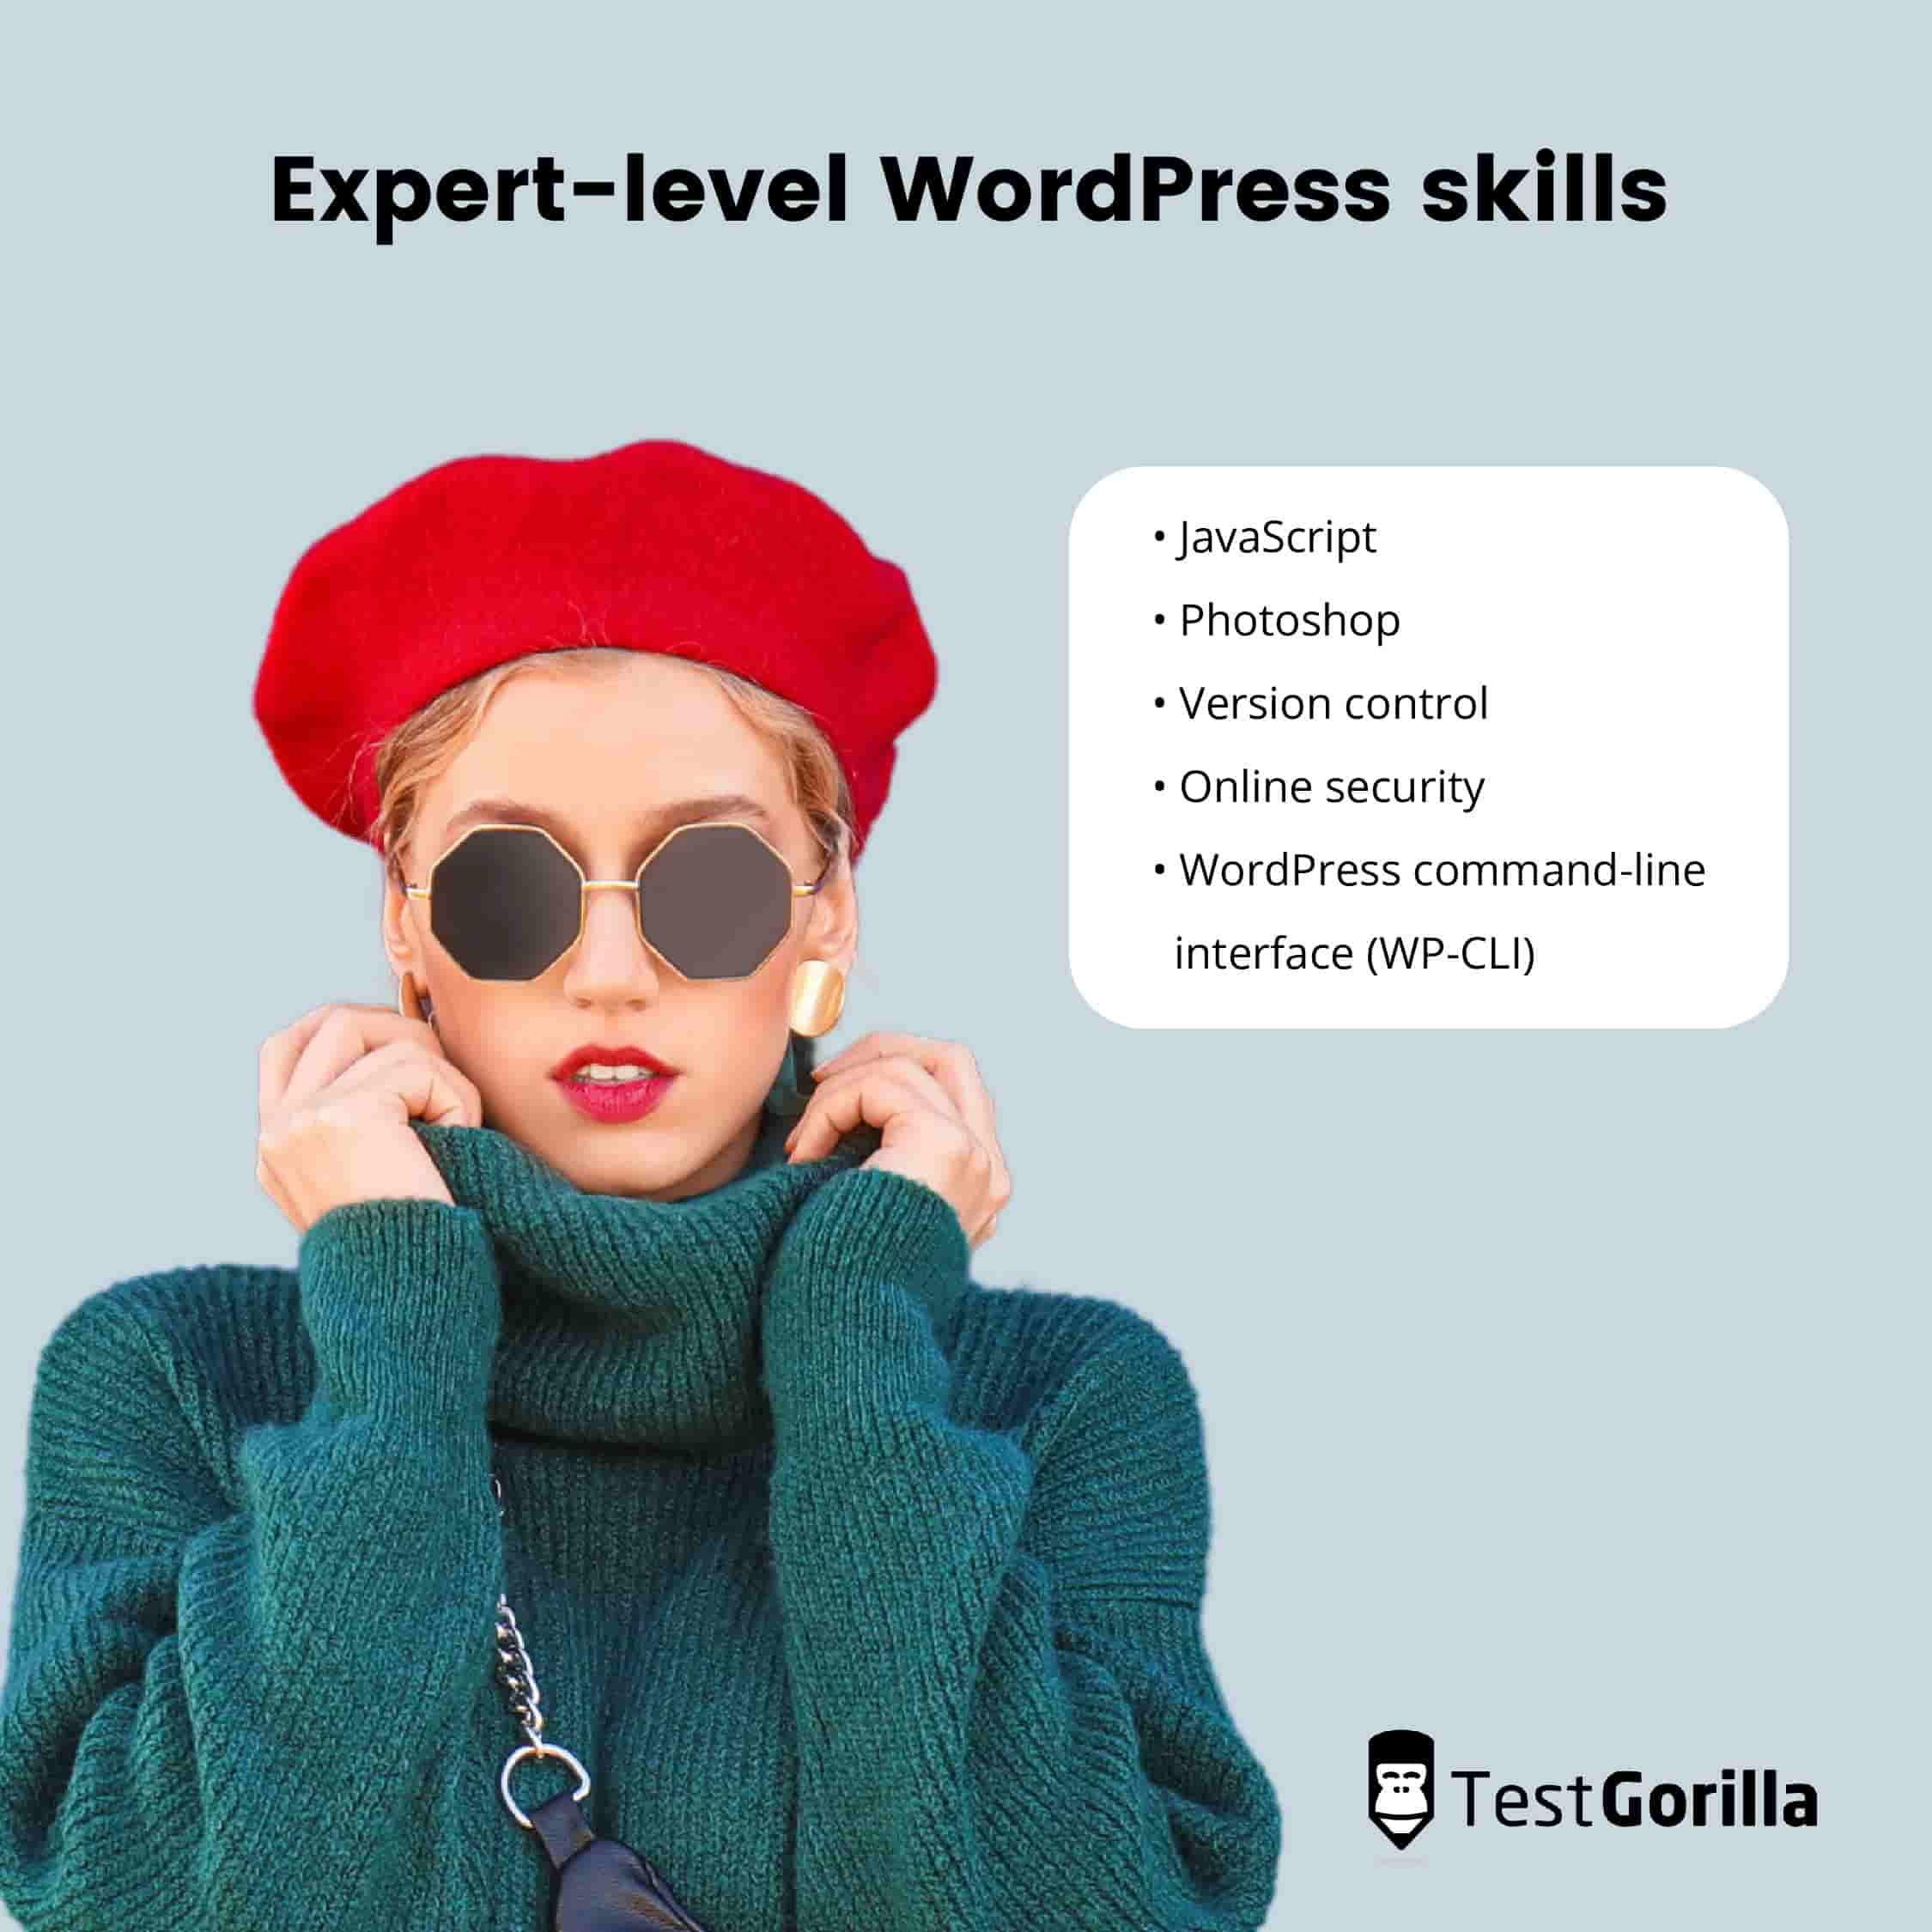 Expert-level WordPress skills